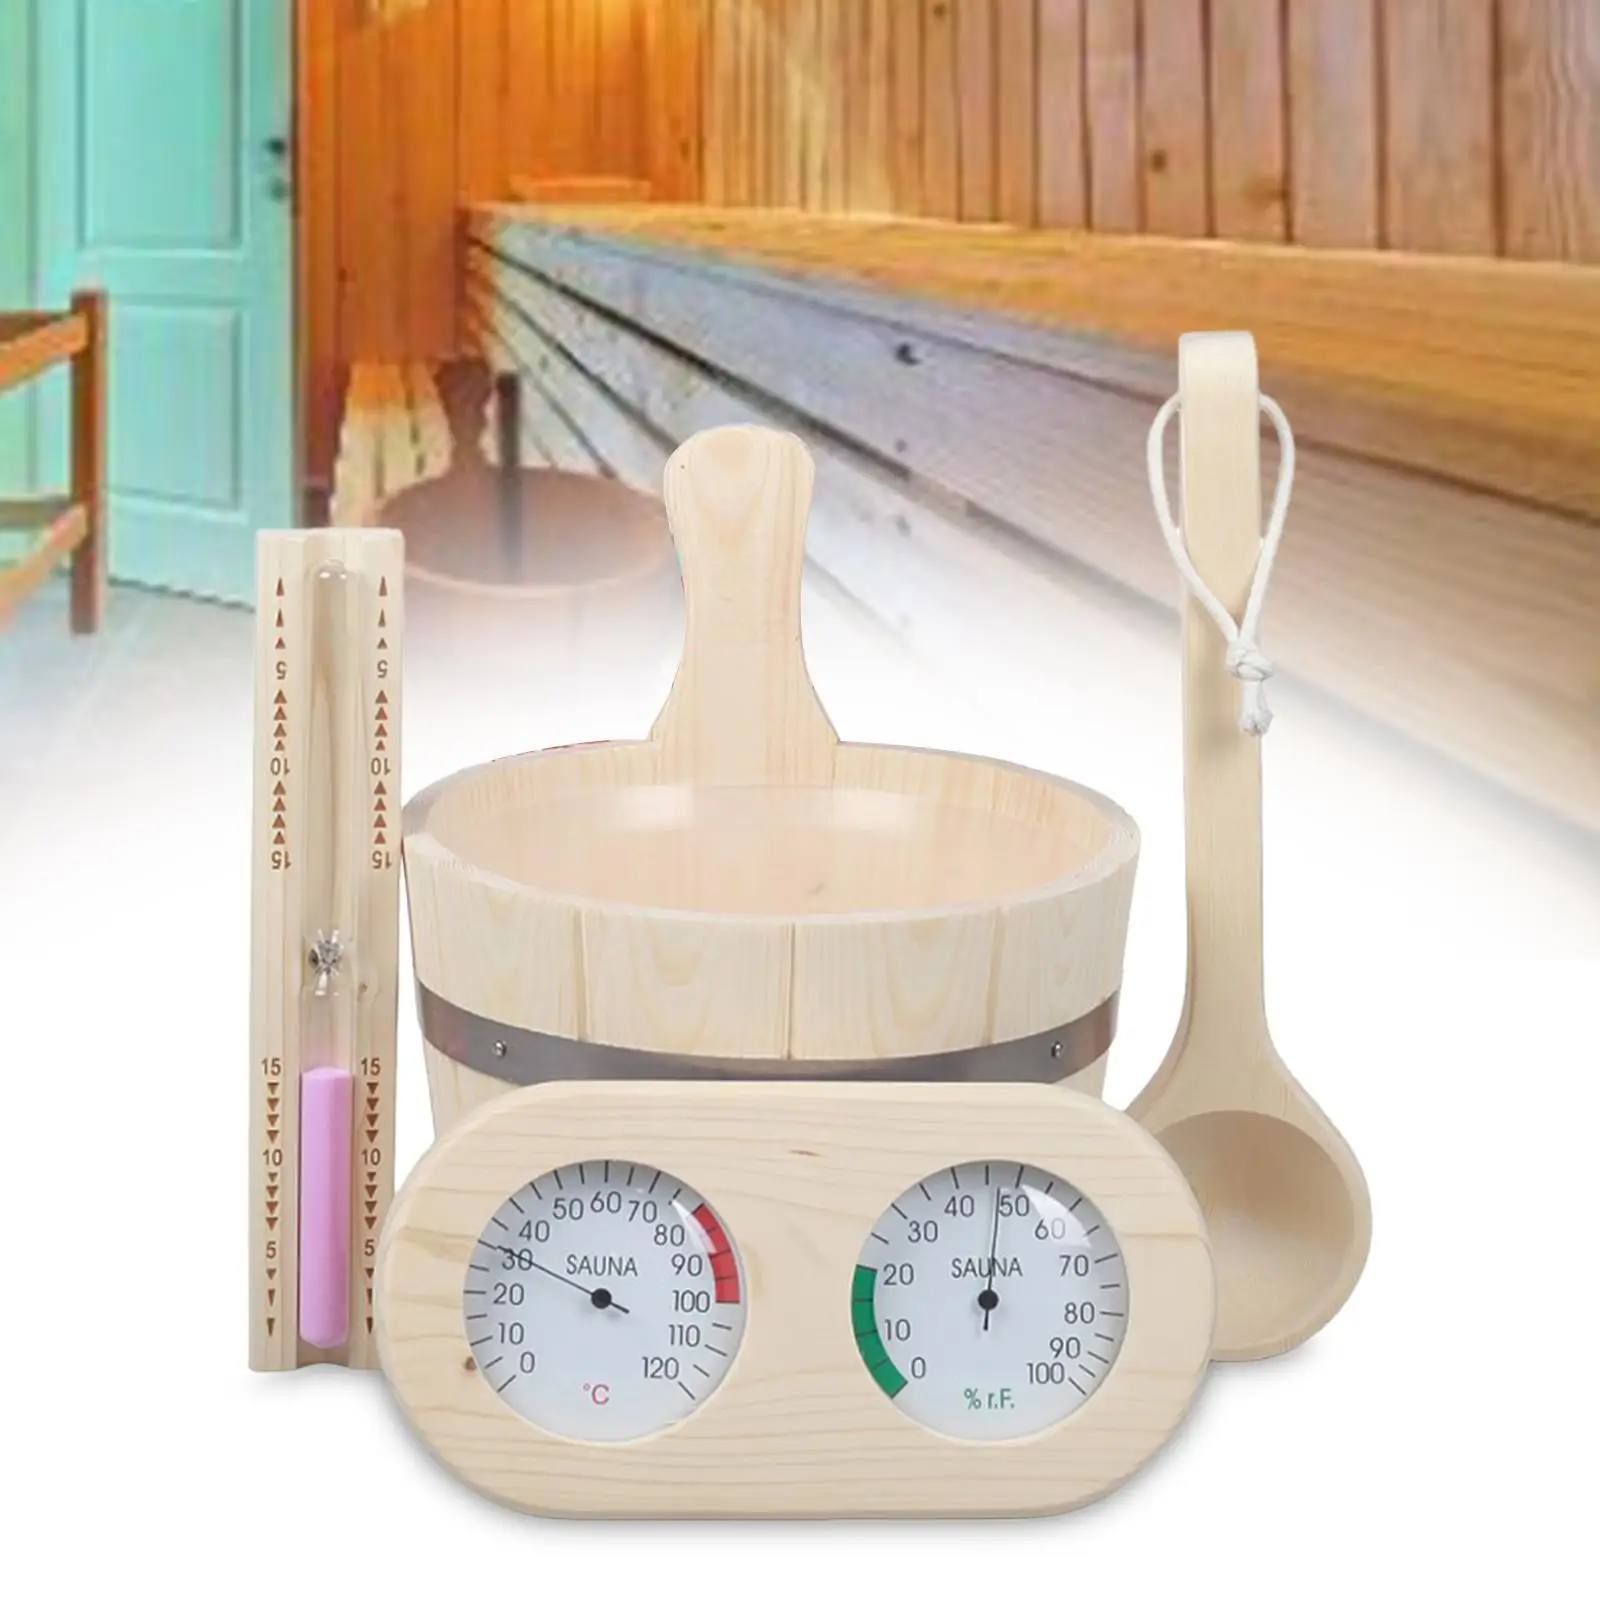 5 Pieces Sauna Accessory Set Handmade Sauna Thermometer Sauna Bucket and Ladle Set Hourglass for Sauna Steam Room Bathroom SPA